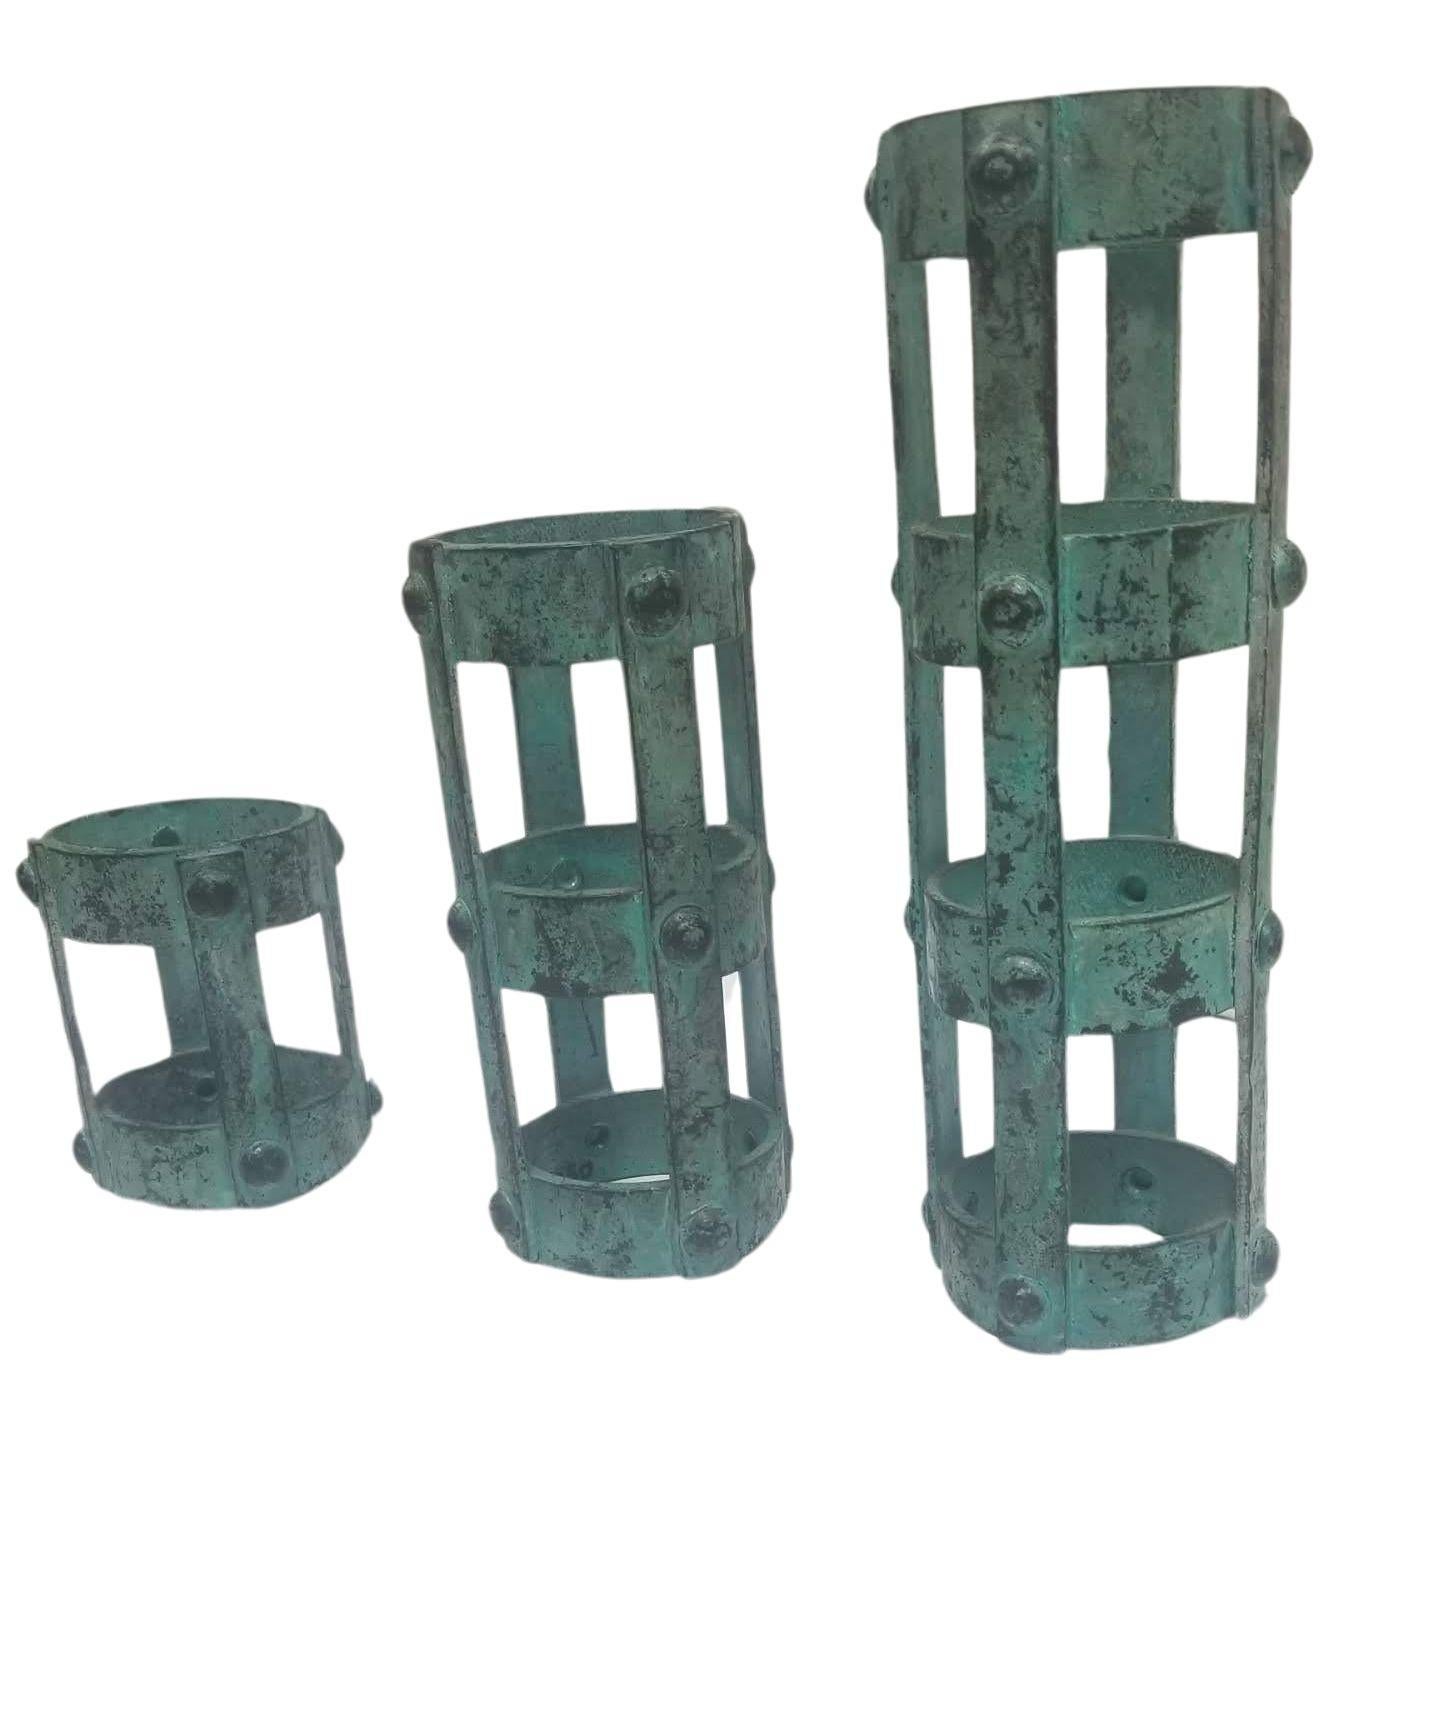 Set of 3 Brutalist style Candlestick Holders Cage Design 1